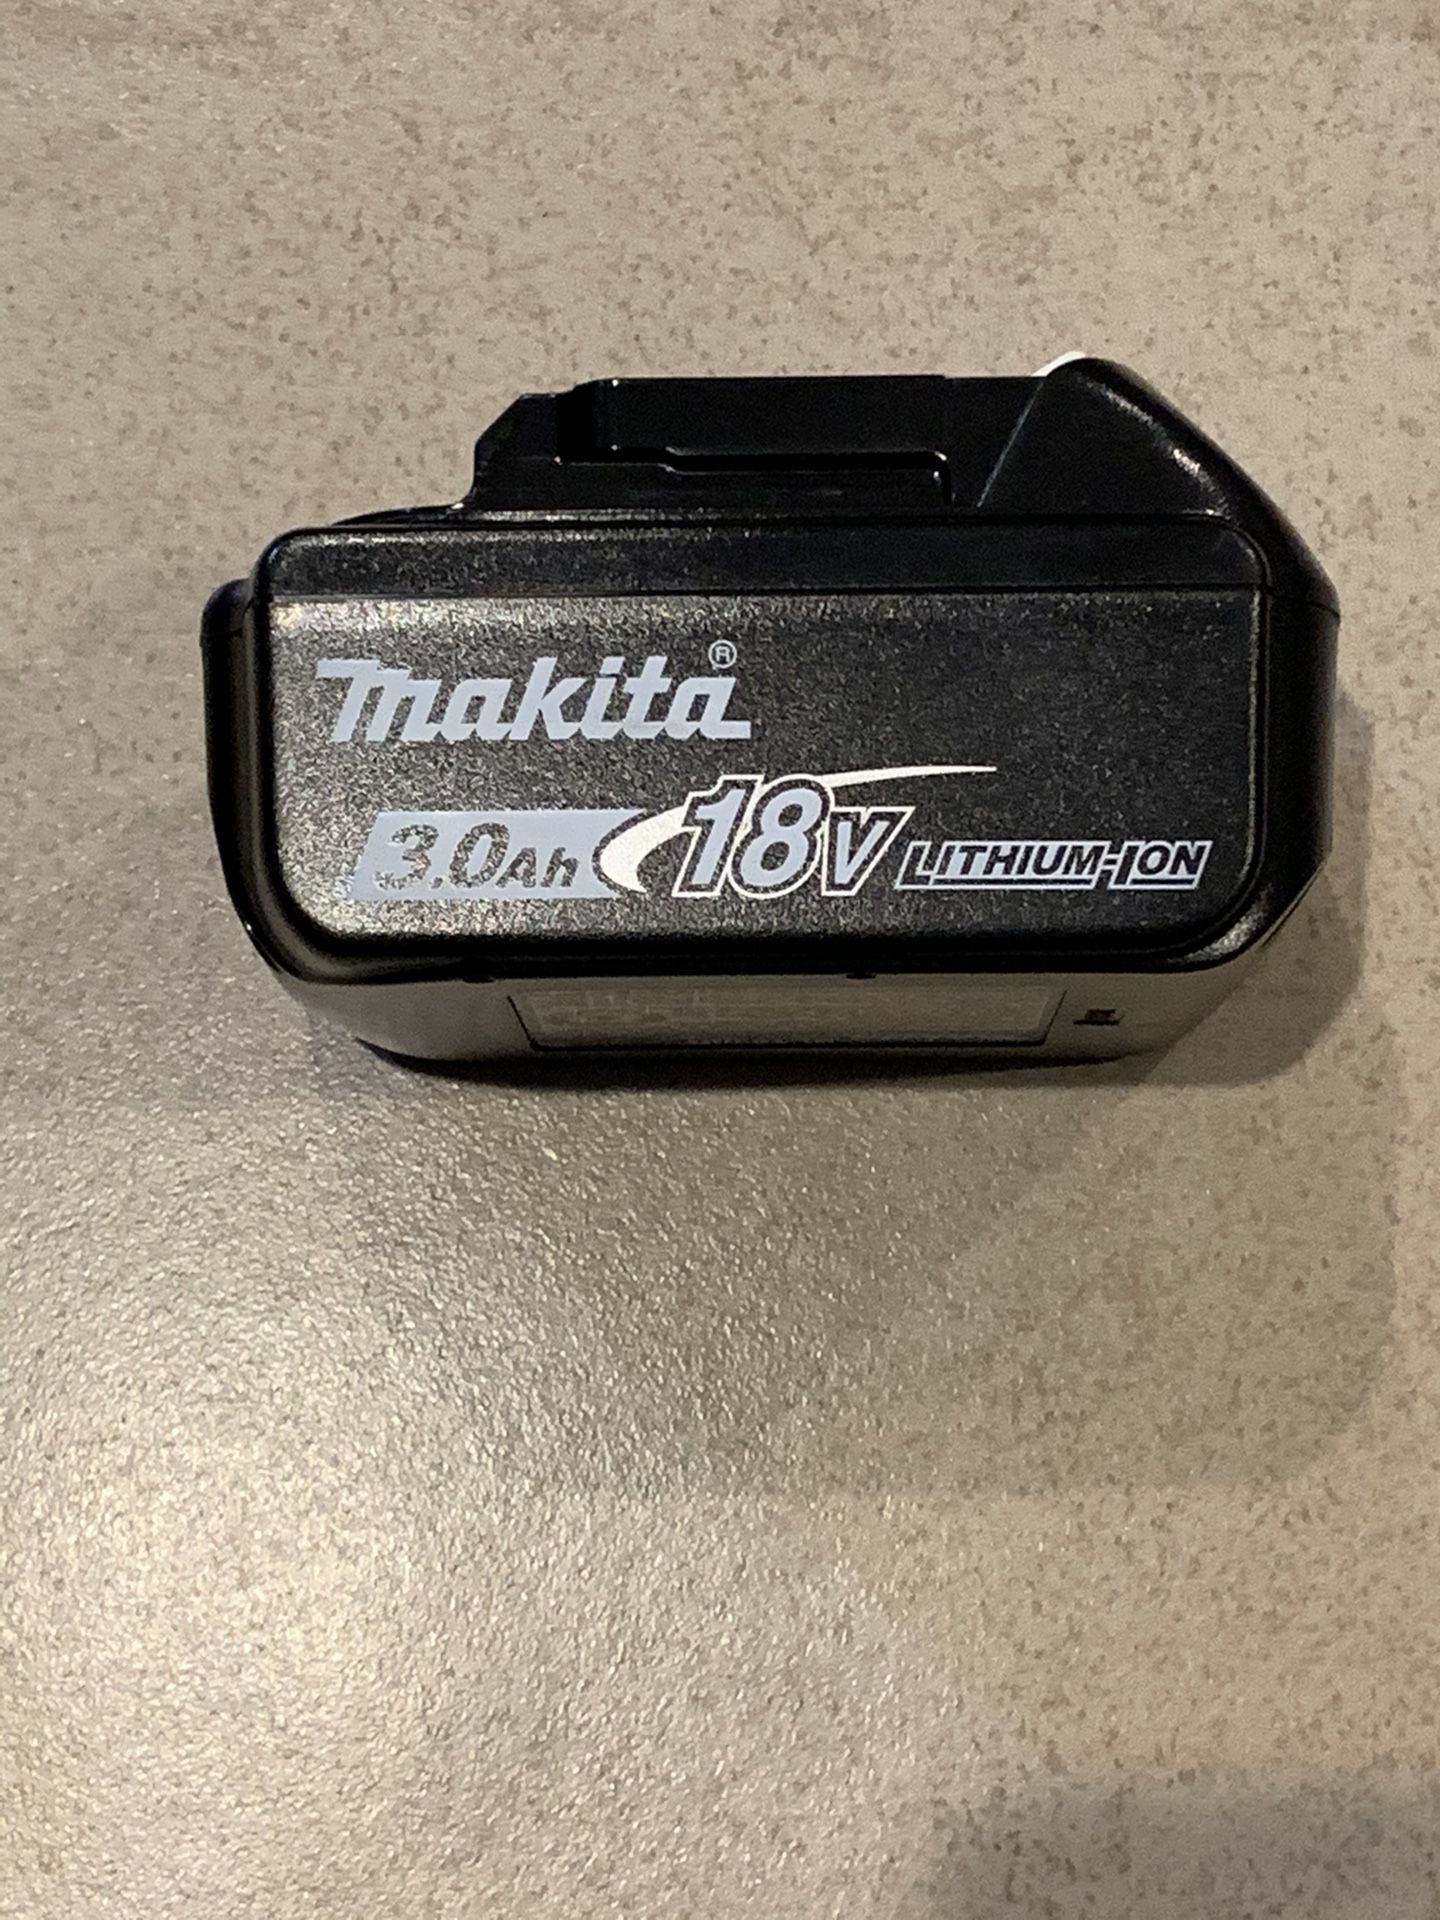 New 18v Makita 3.0ah Battery